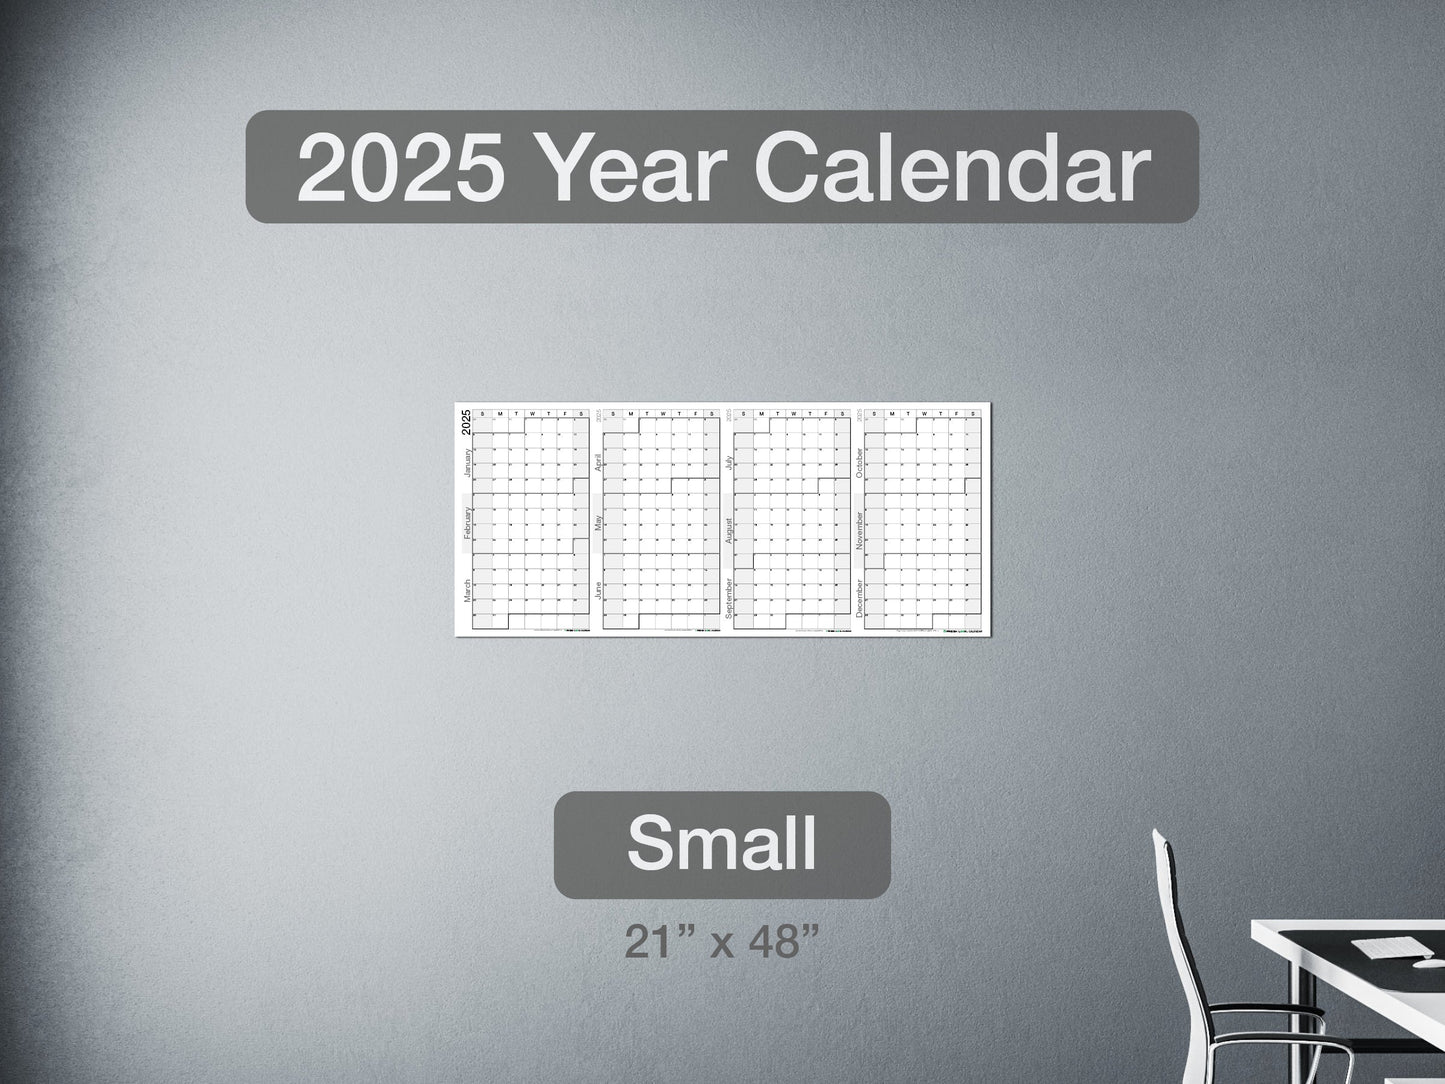 2025 Year Calendar Small